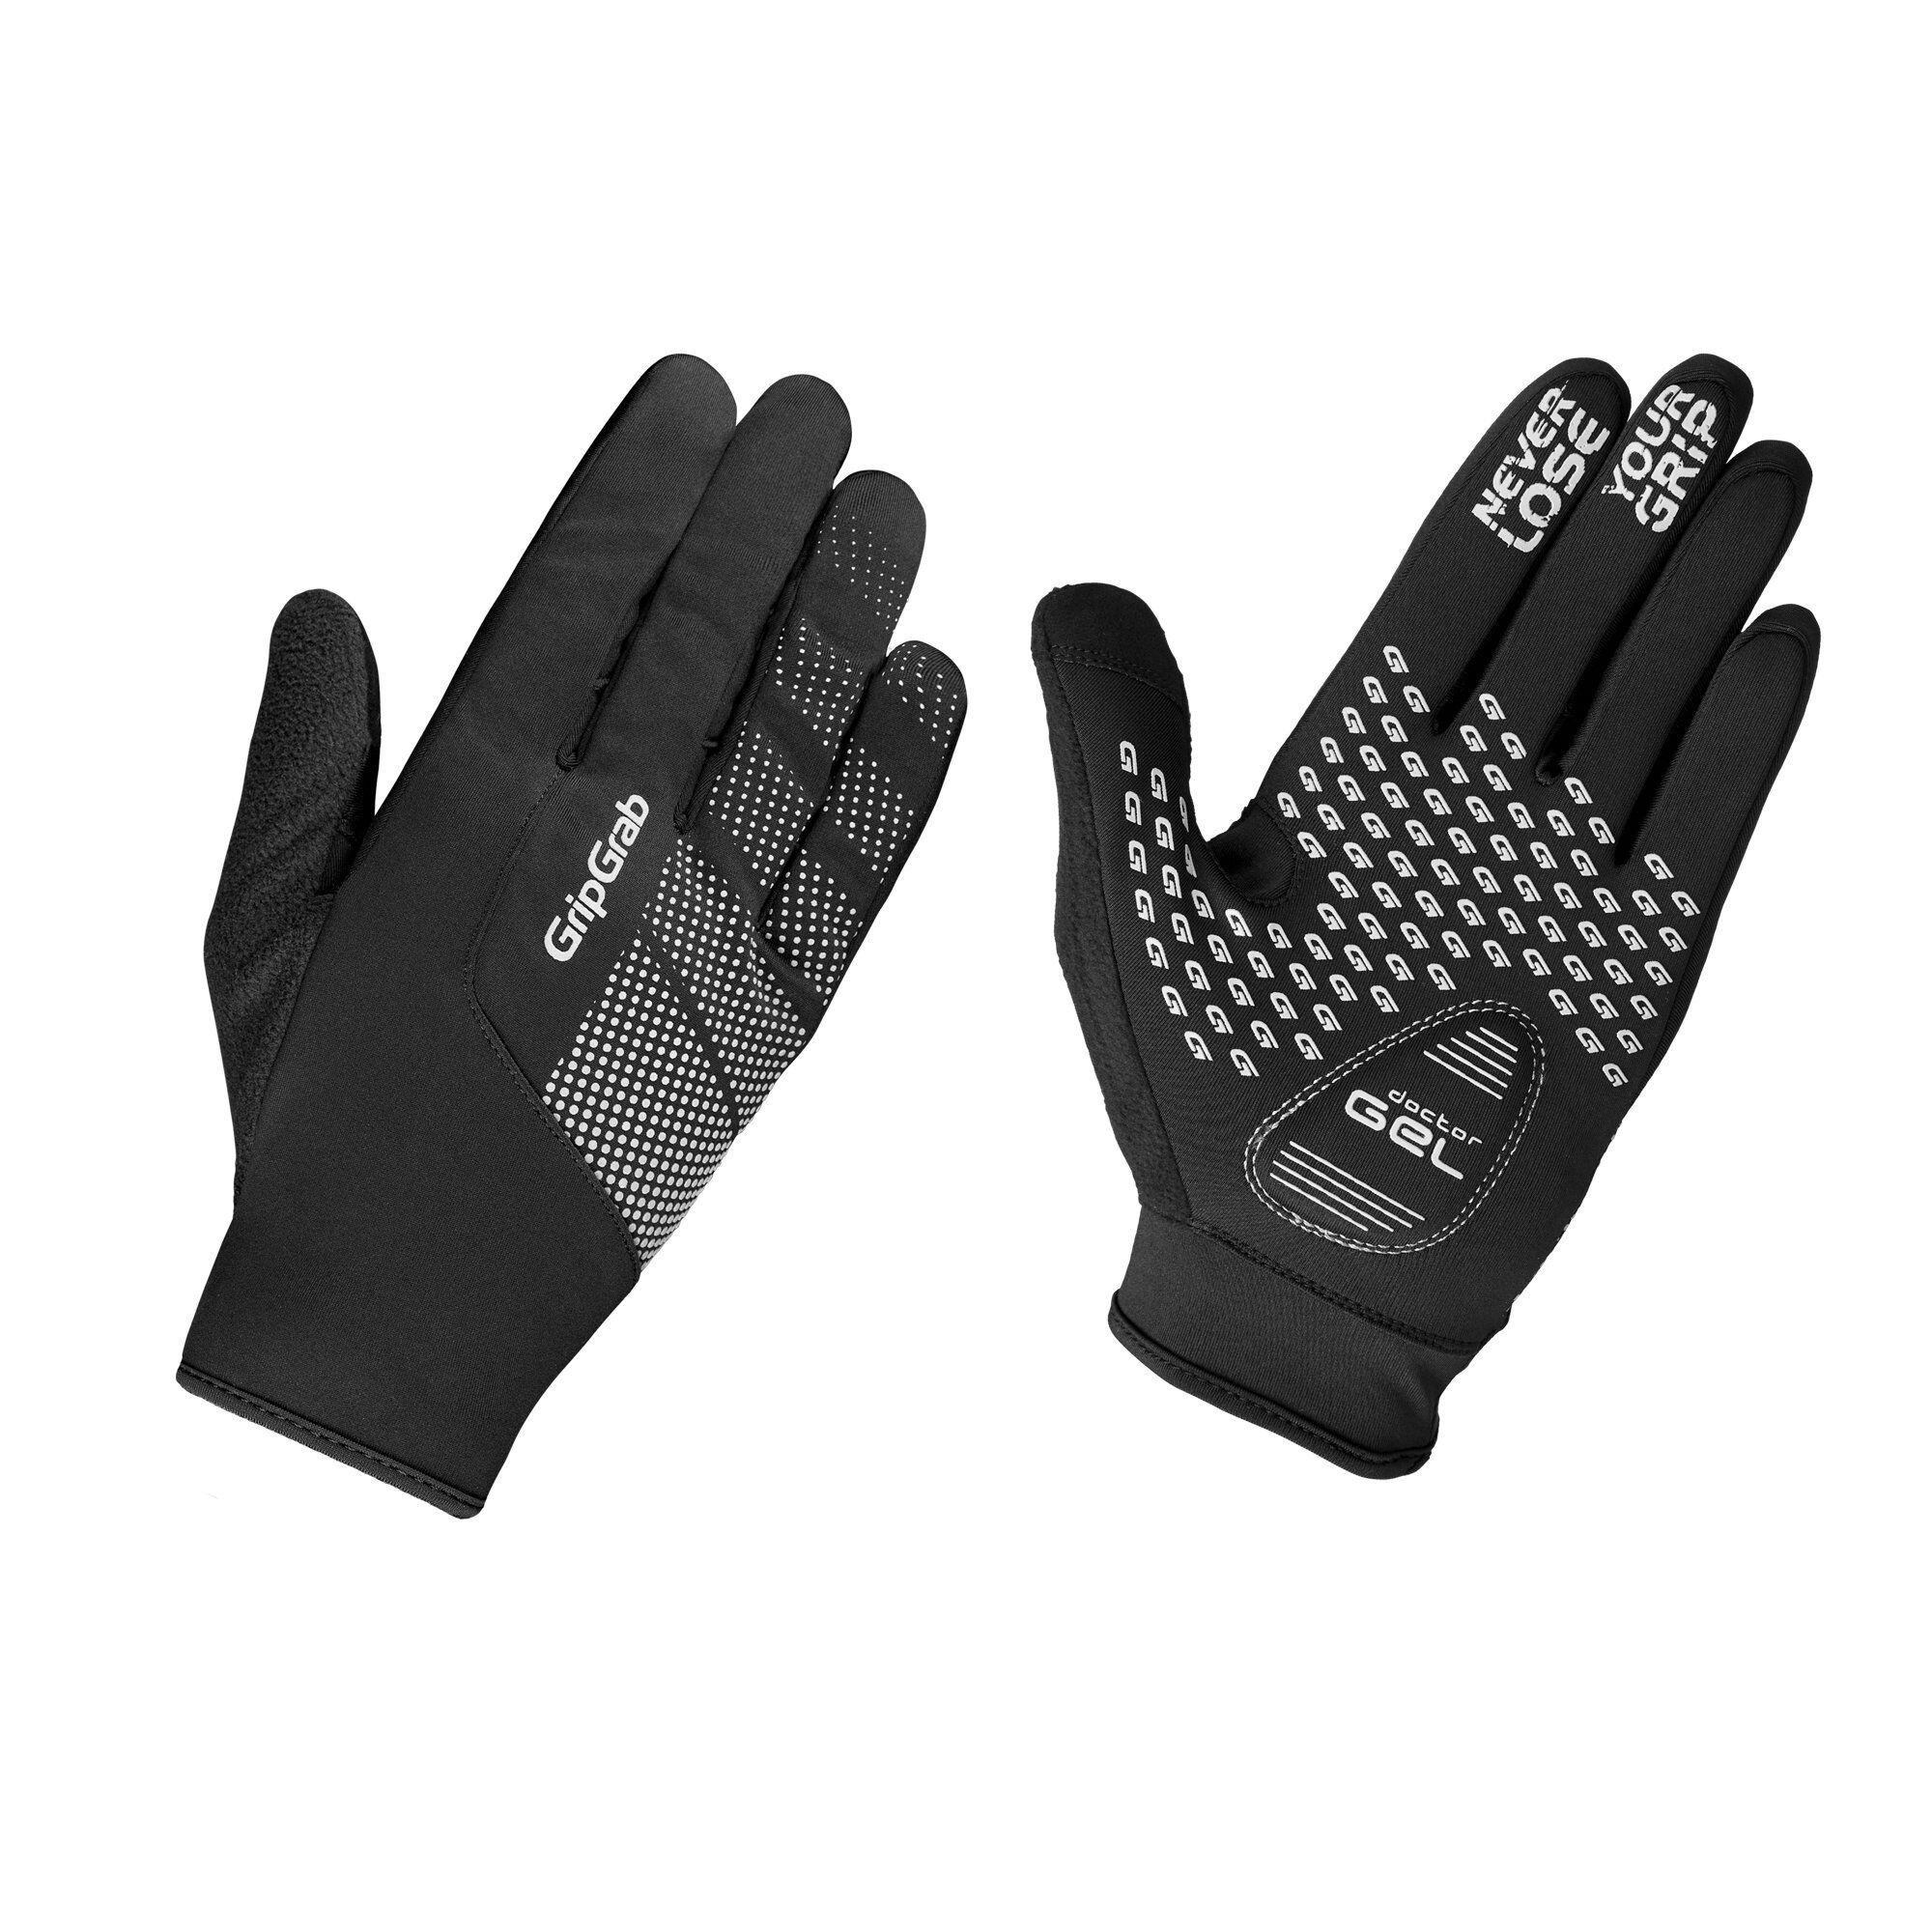 Grip Grab Ride Windproof Midseason Glove - Cycling gloves